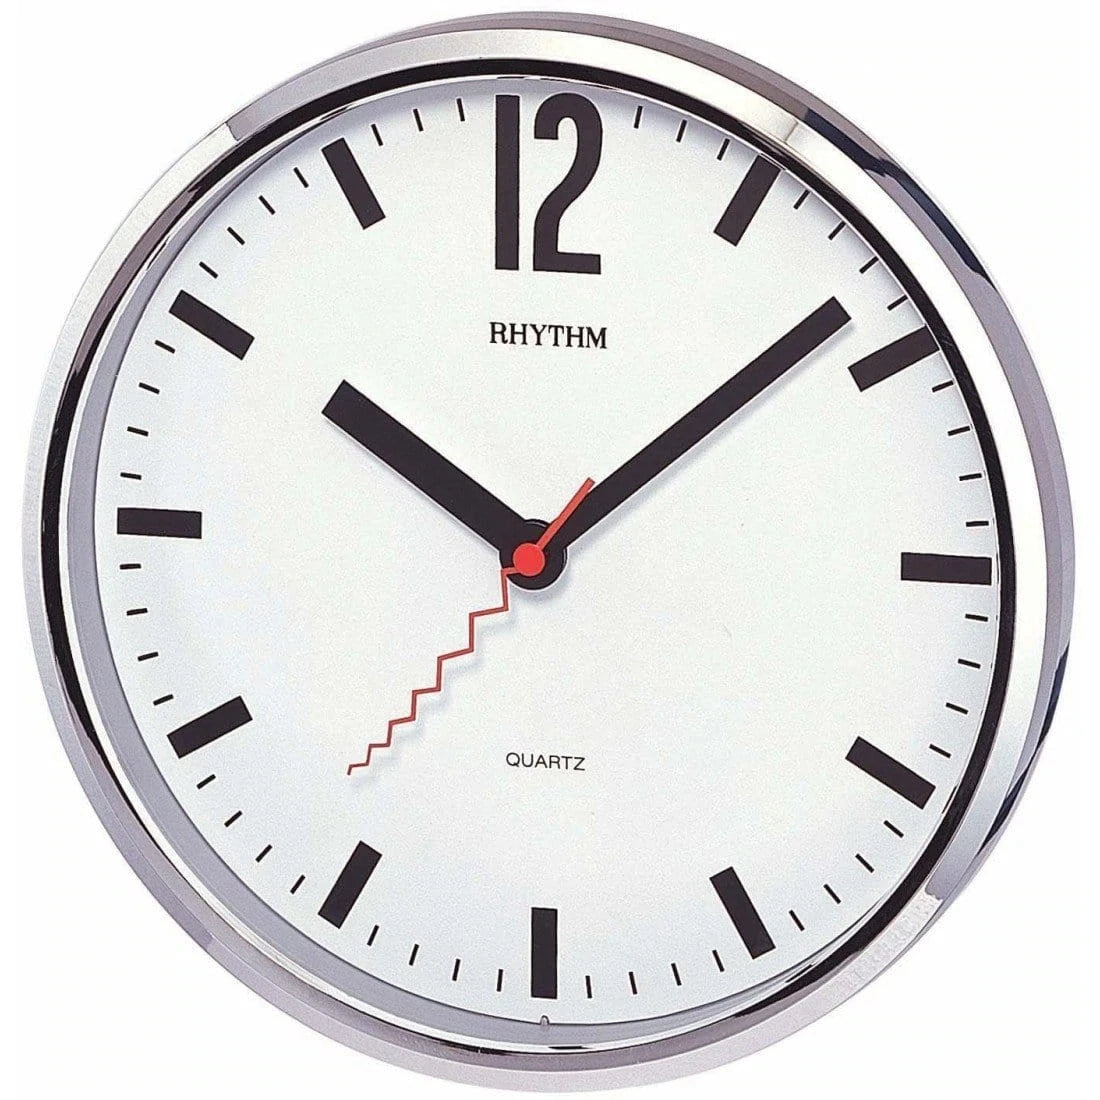 Rhythm Wall Clock CMG839BR66 | stylish watch | accurate timekeeping | wall clock | round clock | Casio watch | wall watch | home décor | timepiece | Halabh.com